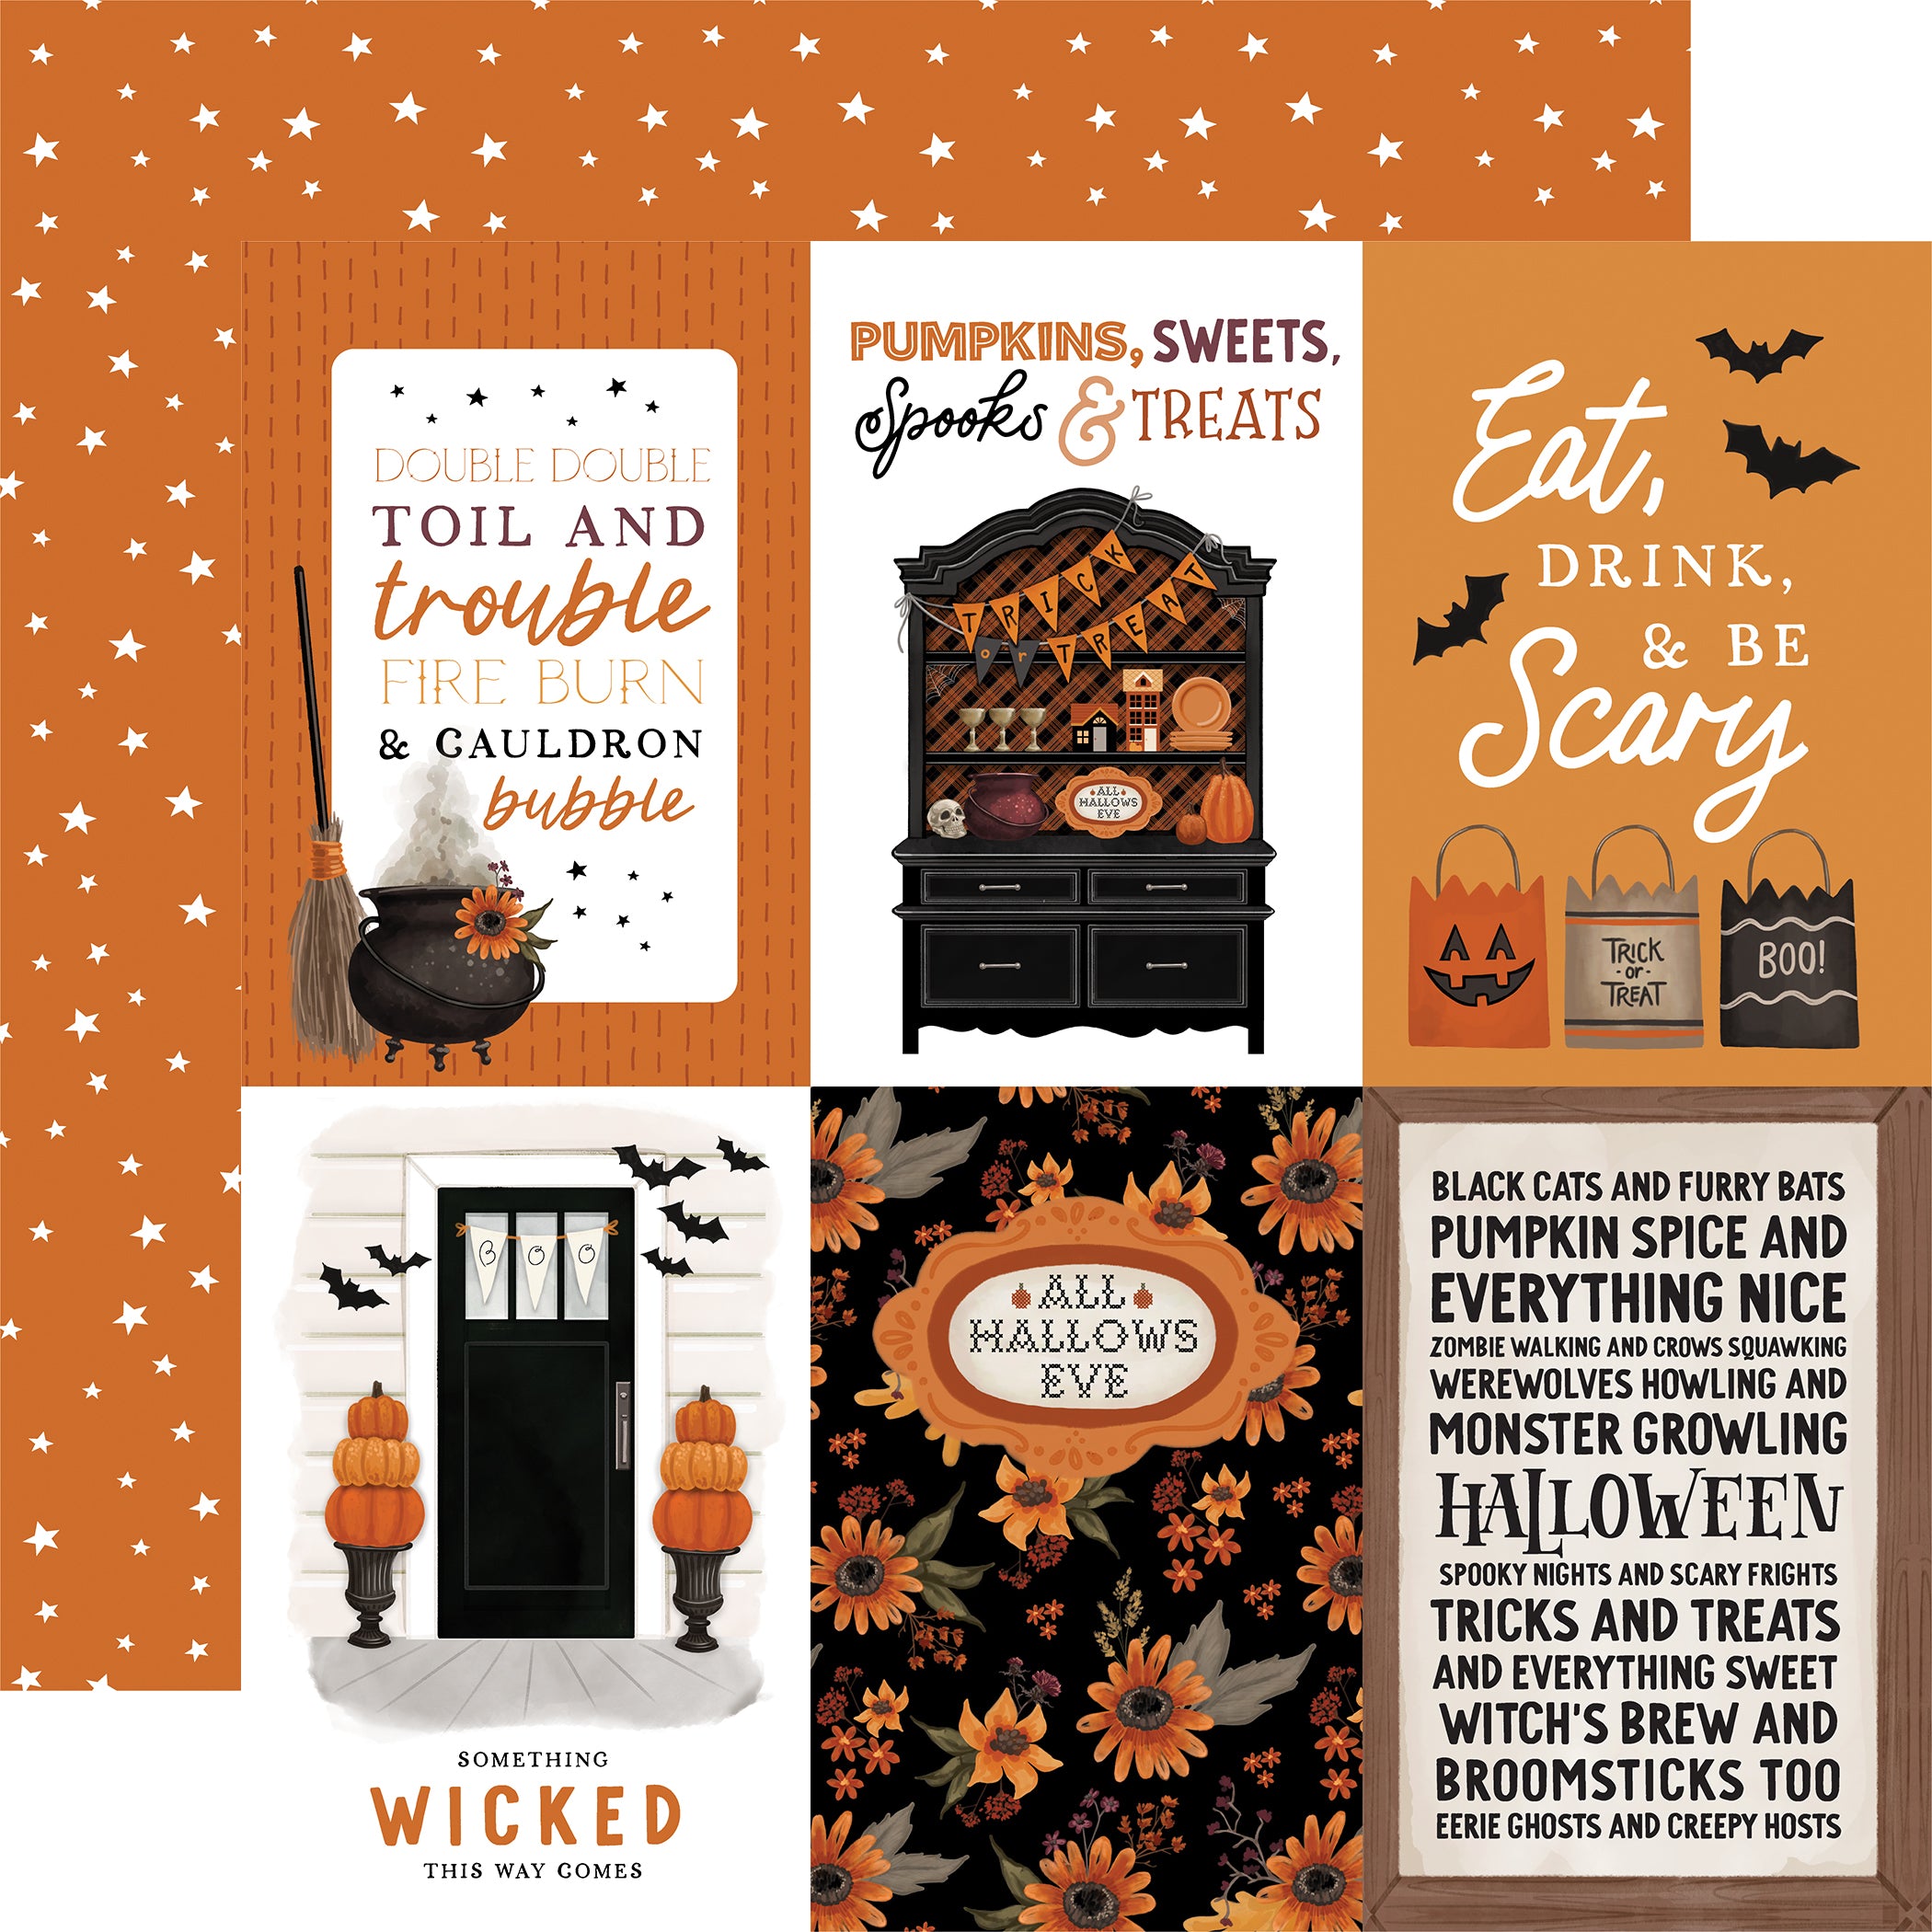 Halloween Collection 12 x 12 Scrapbook Paper & Sticker Pack by Carta Bella